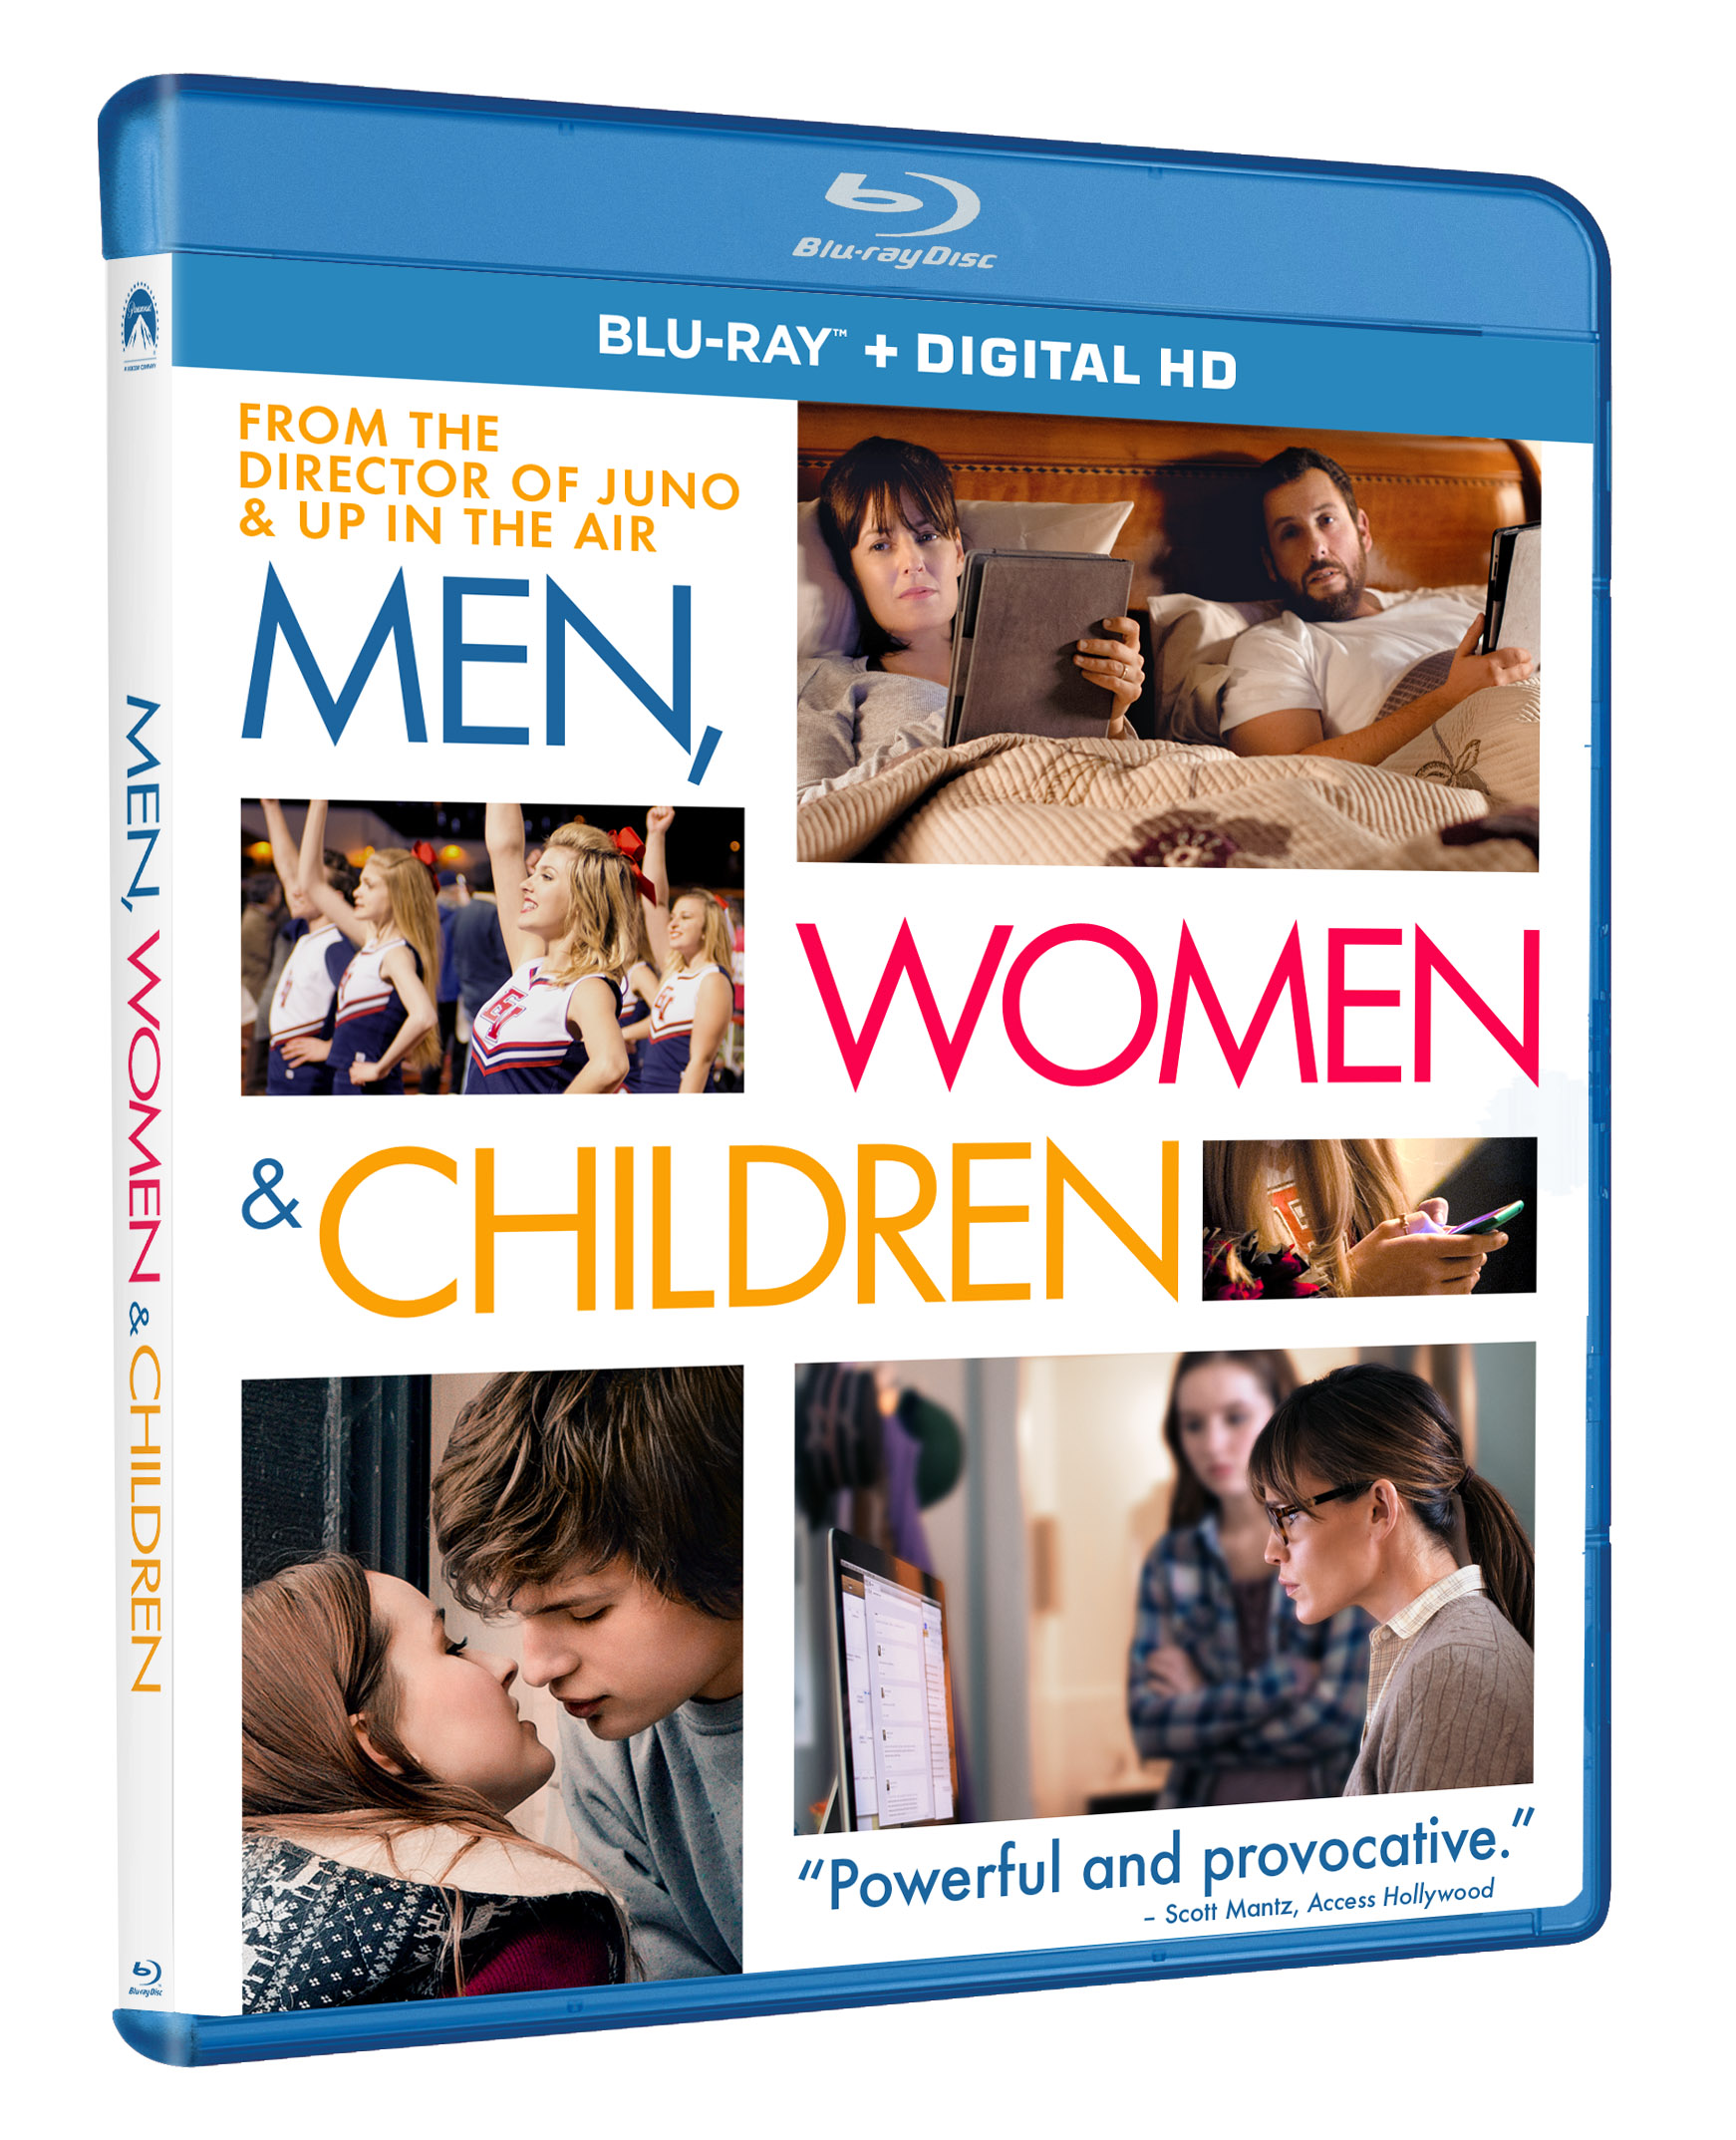 Men, Women and Children Blu-ray Review